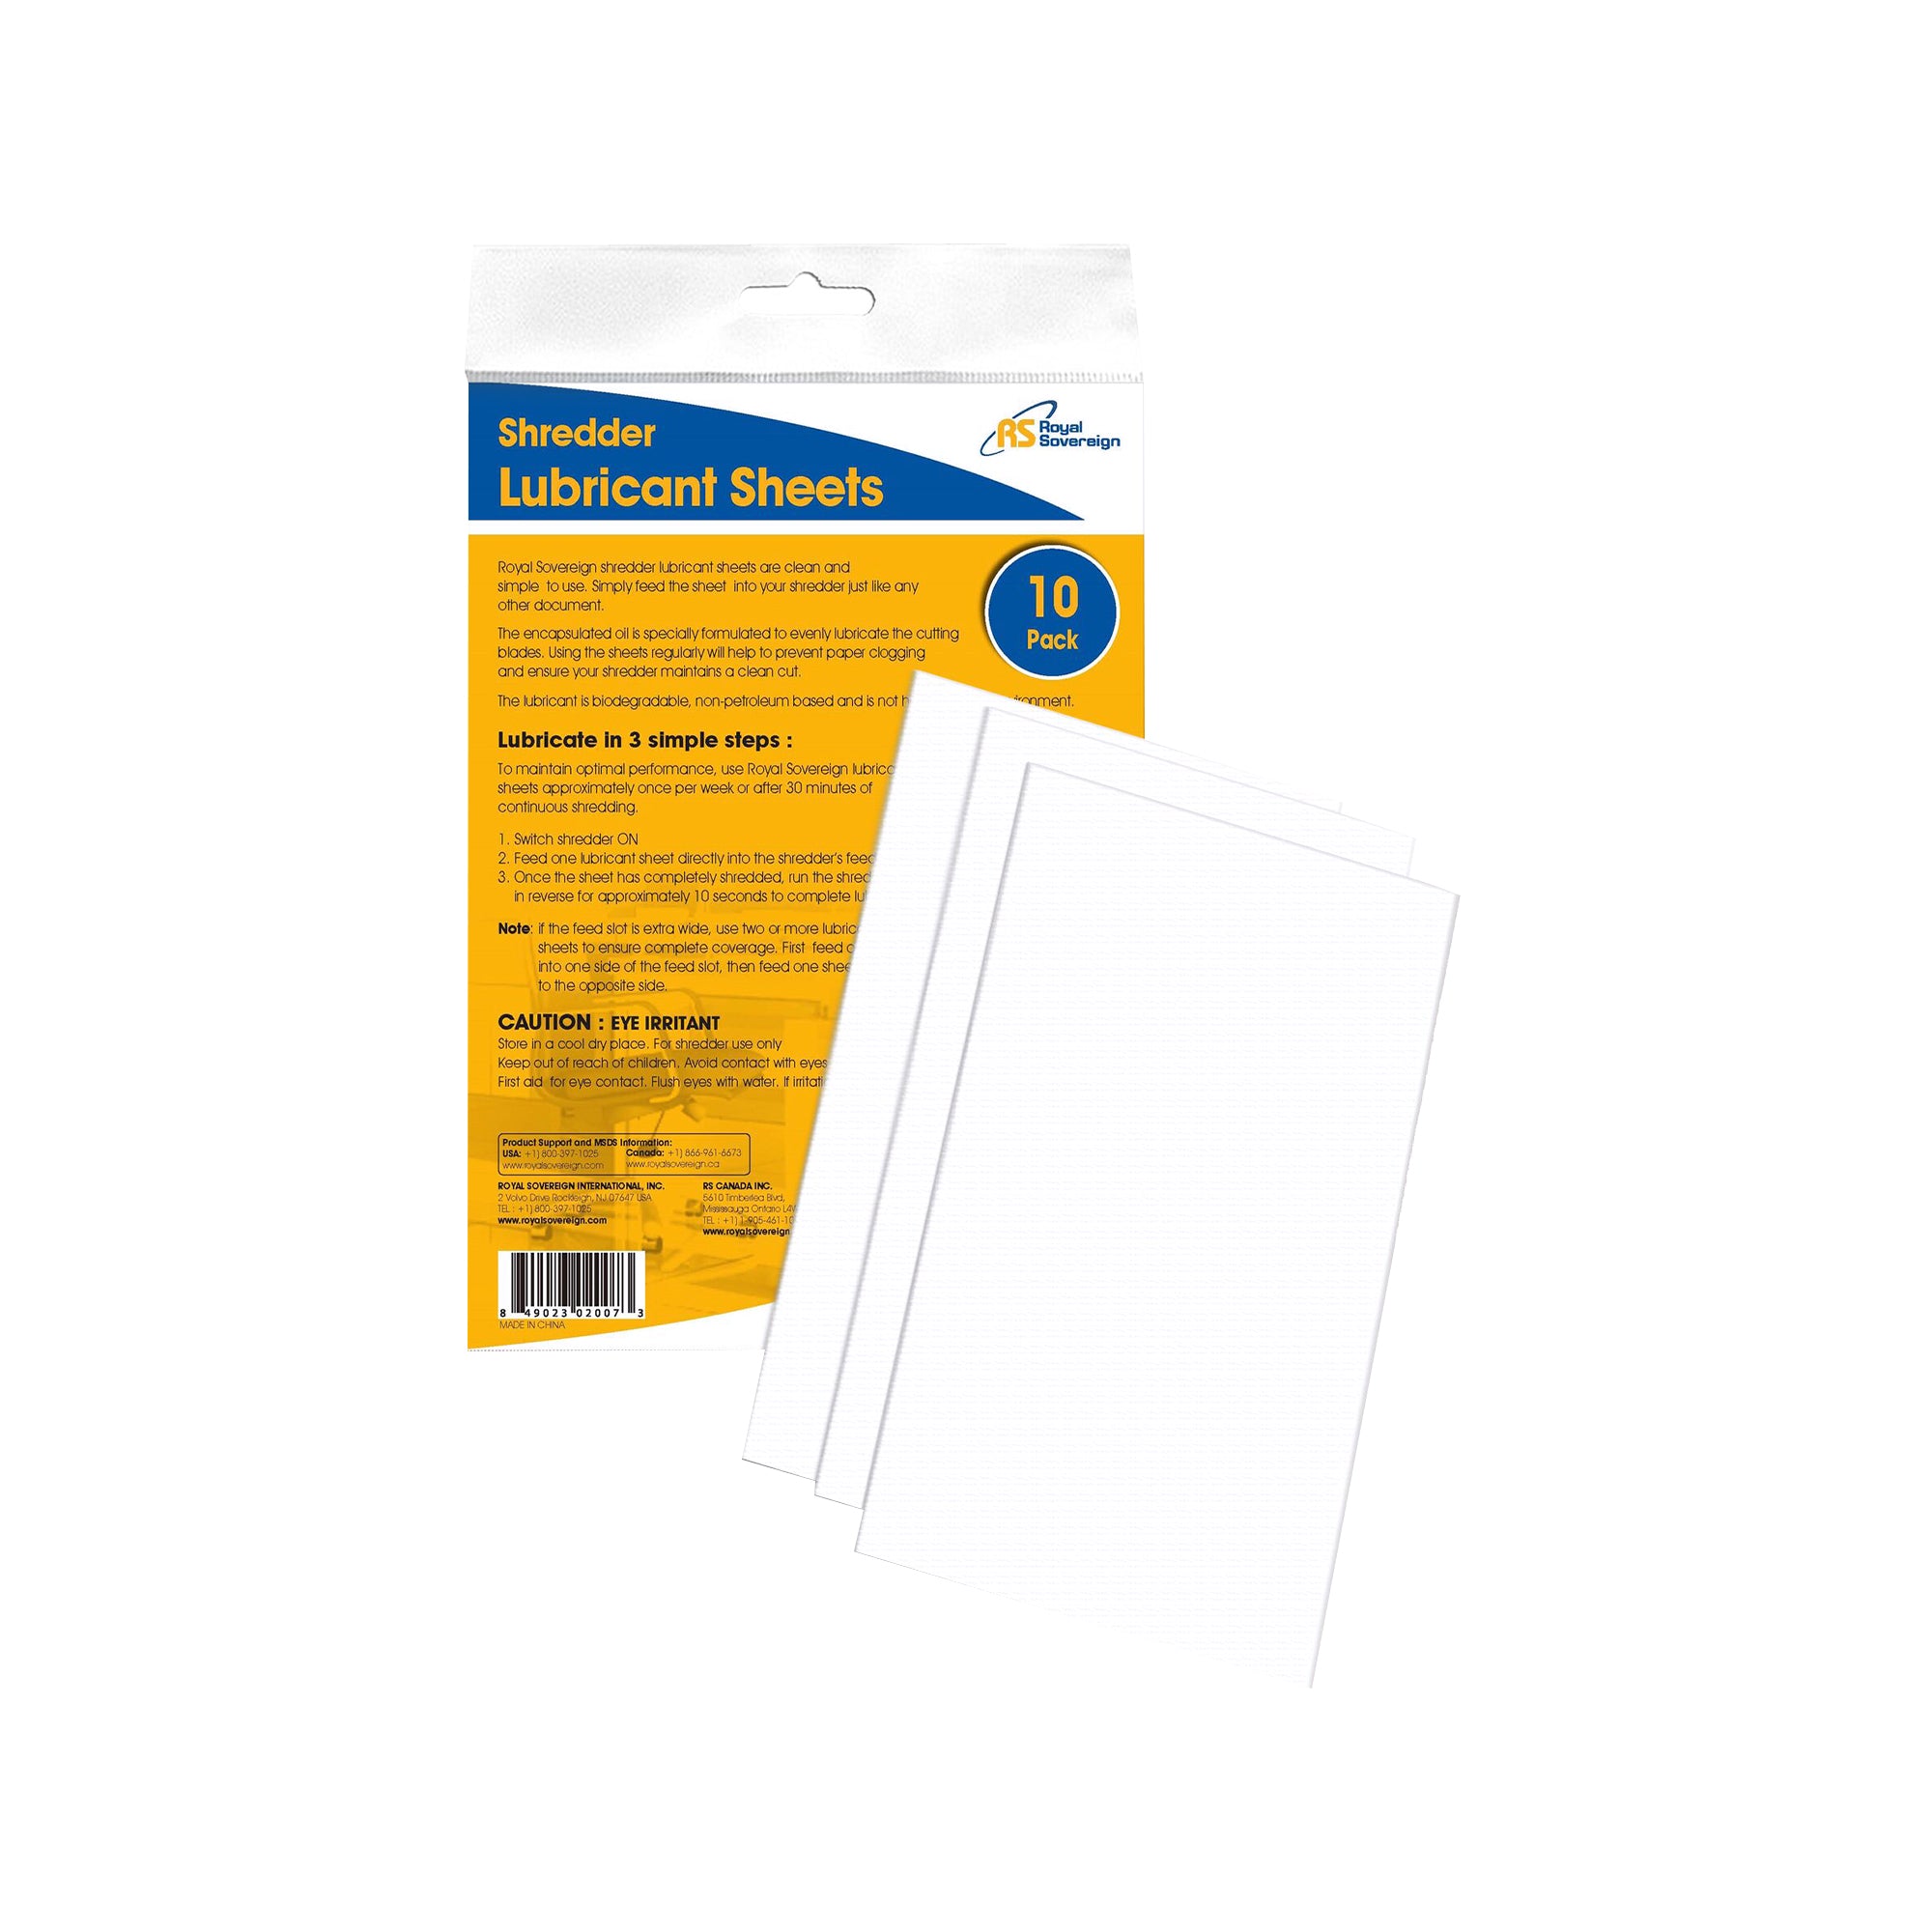 RS-SLS, Shredder Lubricant Sheets (10 pack)